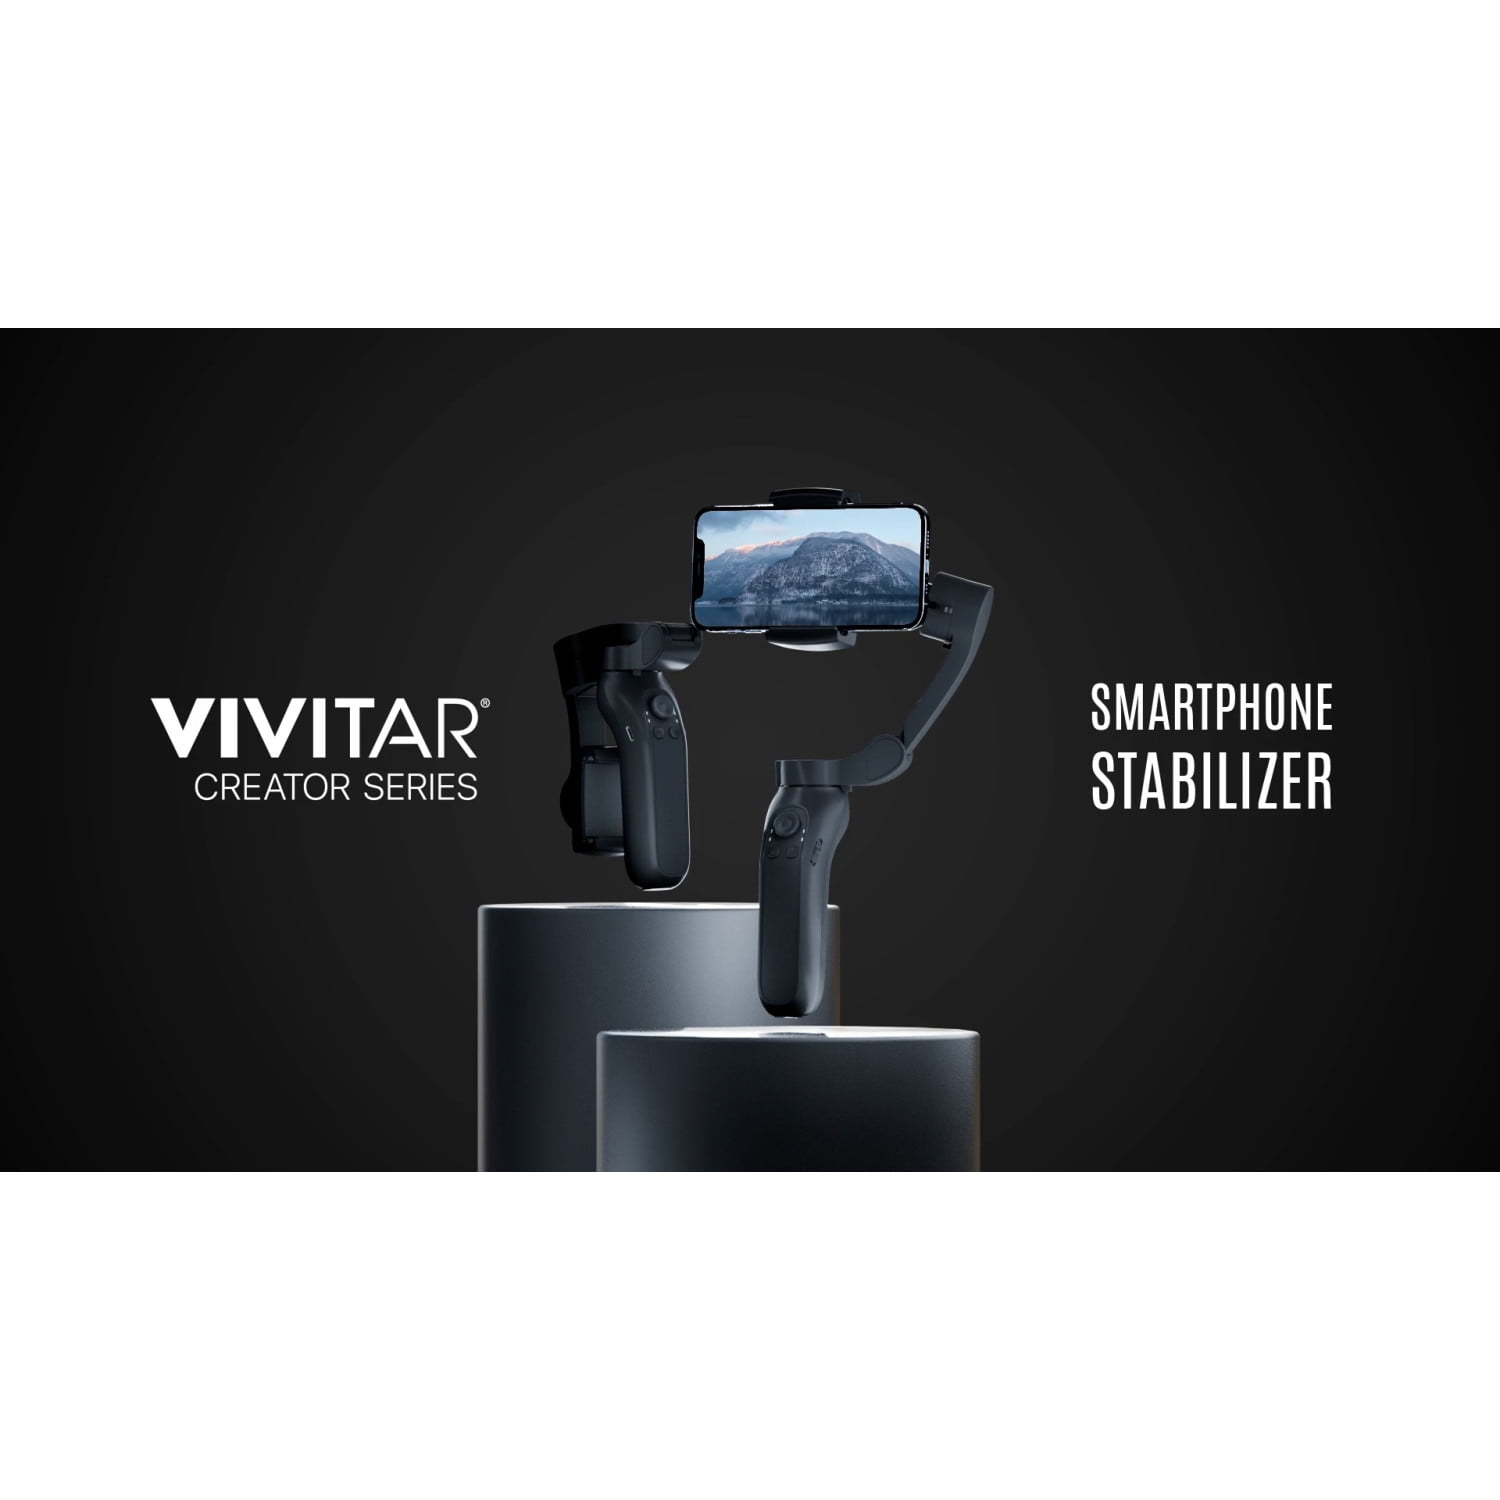 Vivitar Smartphone Stabilizer, 3-Axis Foldable Pocket Gimbal